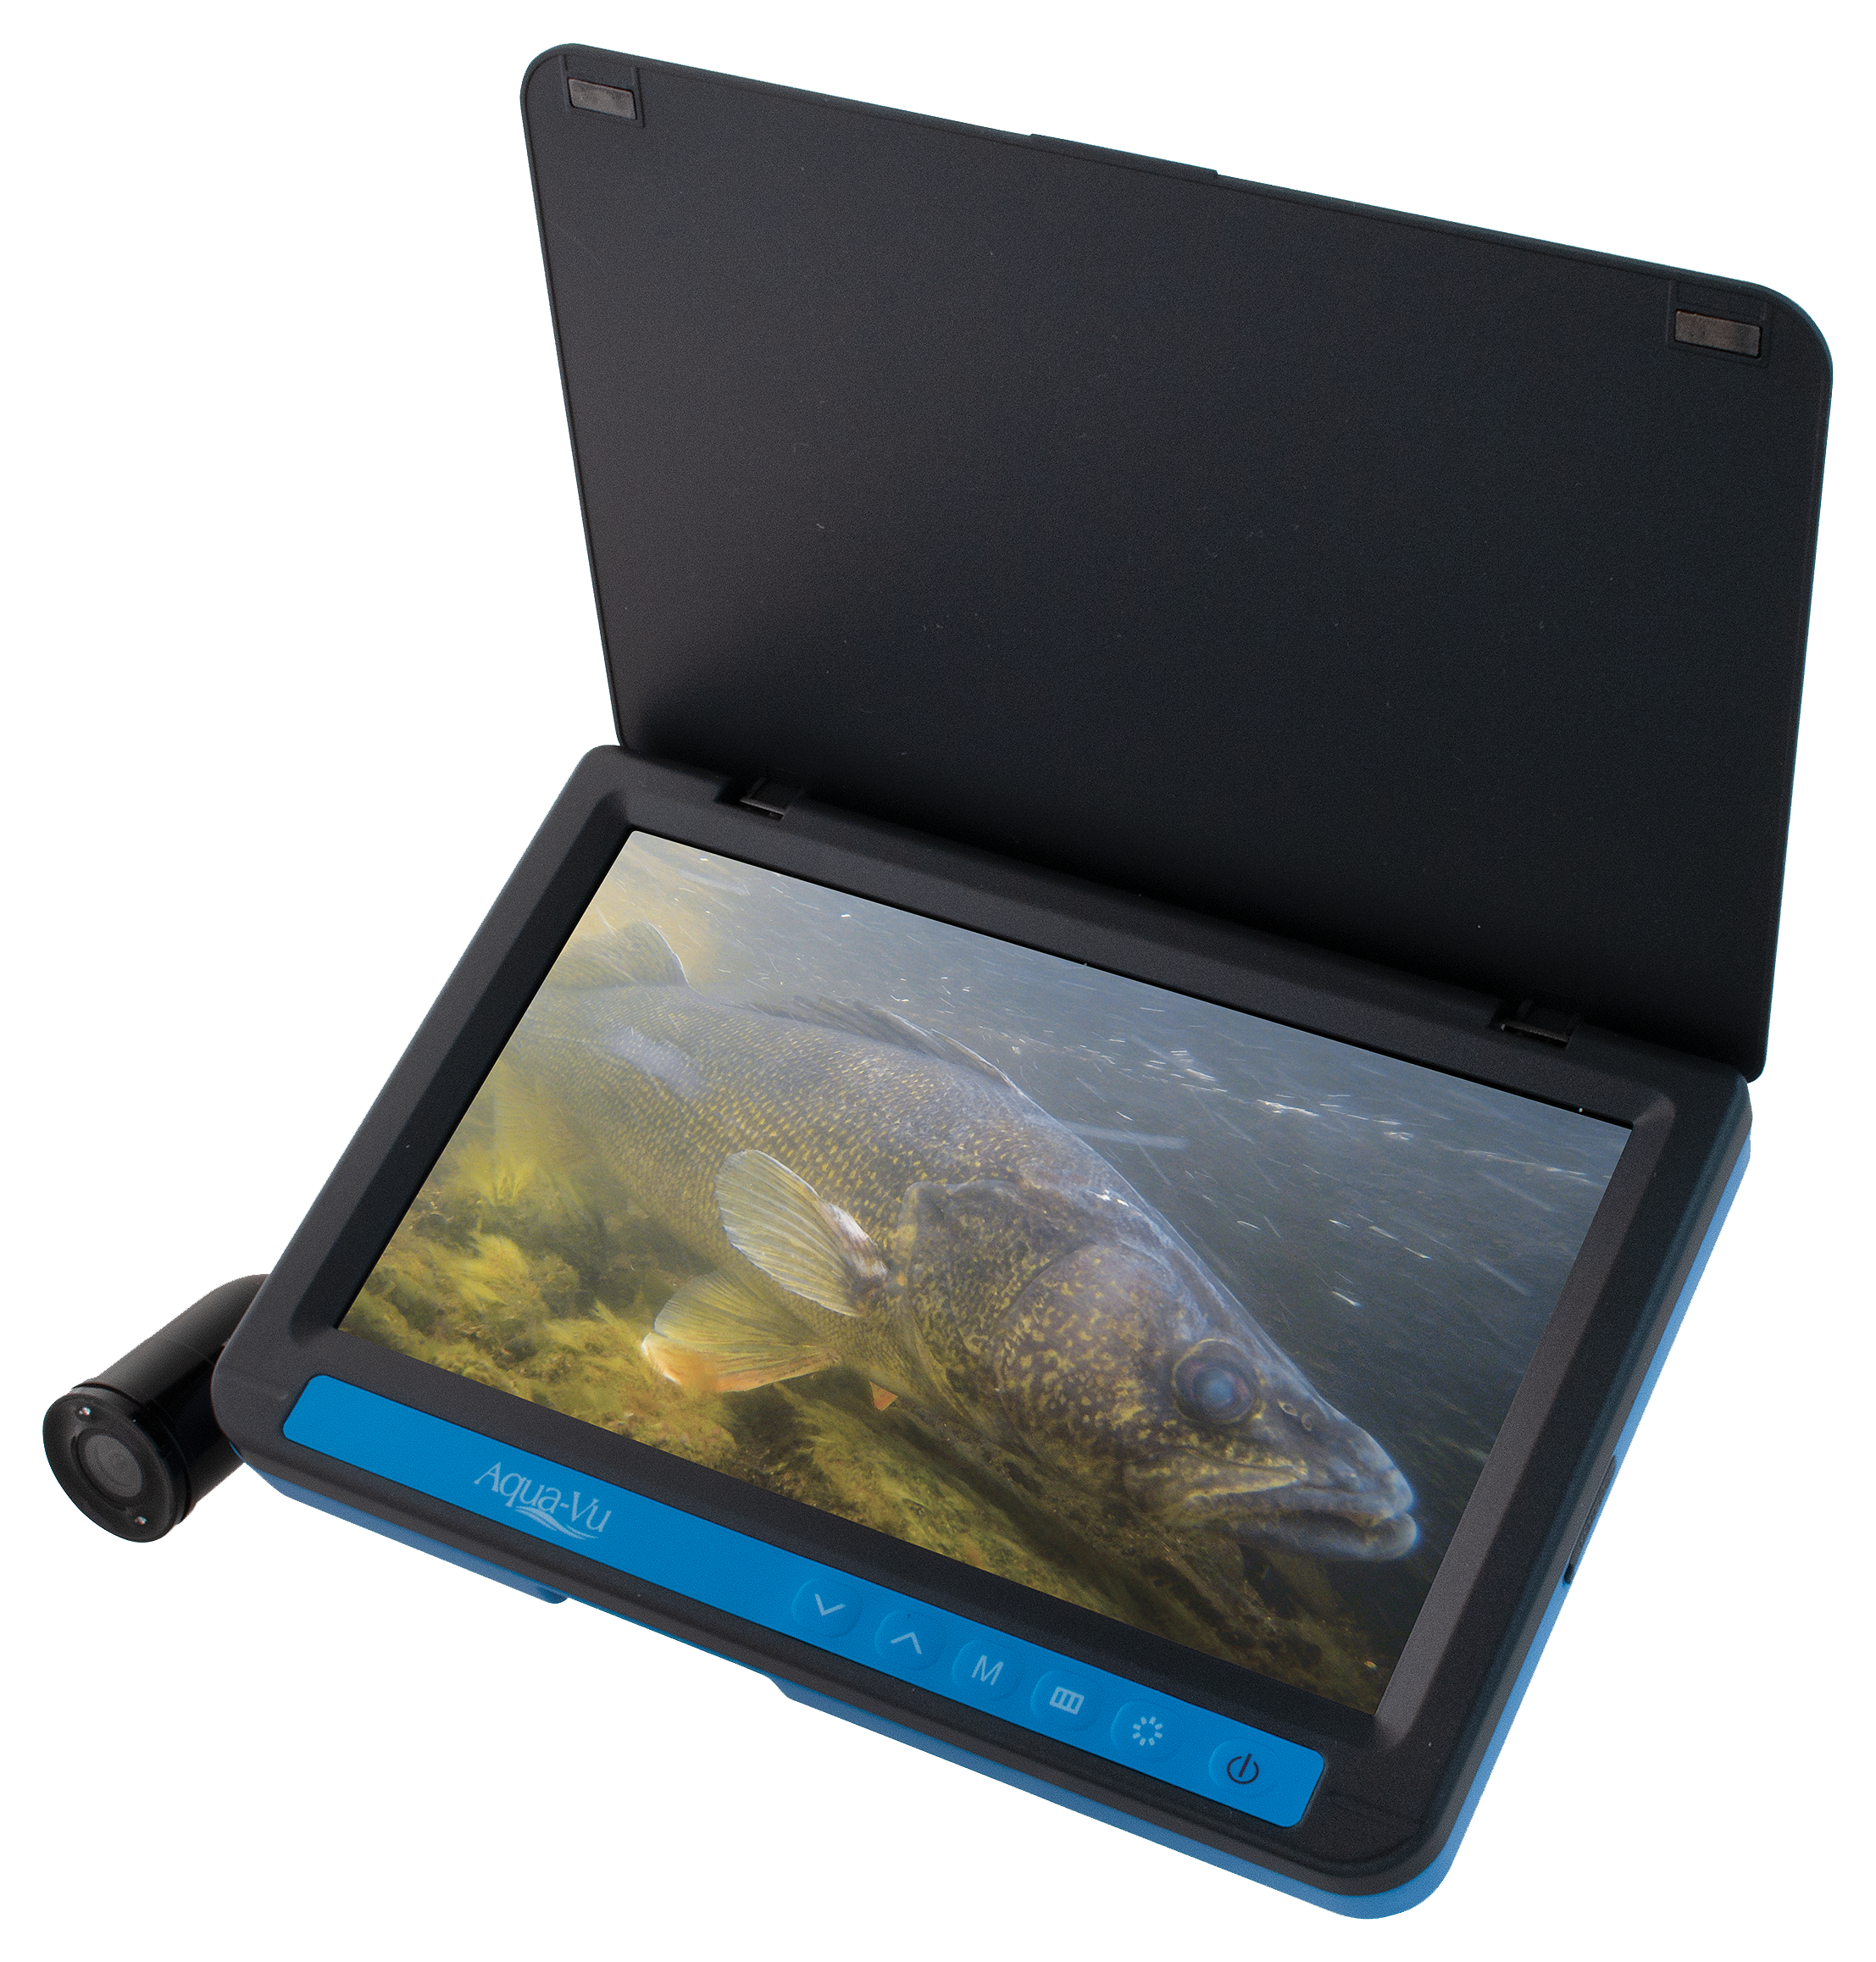 Aqua-Vu® AV722 Live Underwater Fishing Camera, Fish & Depth